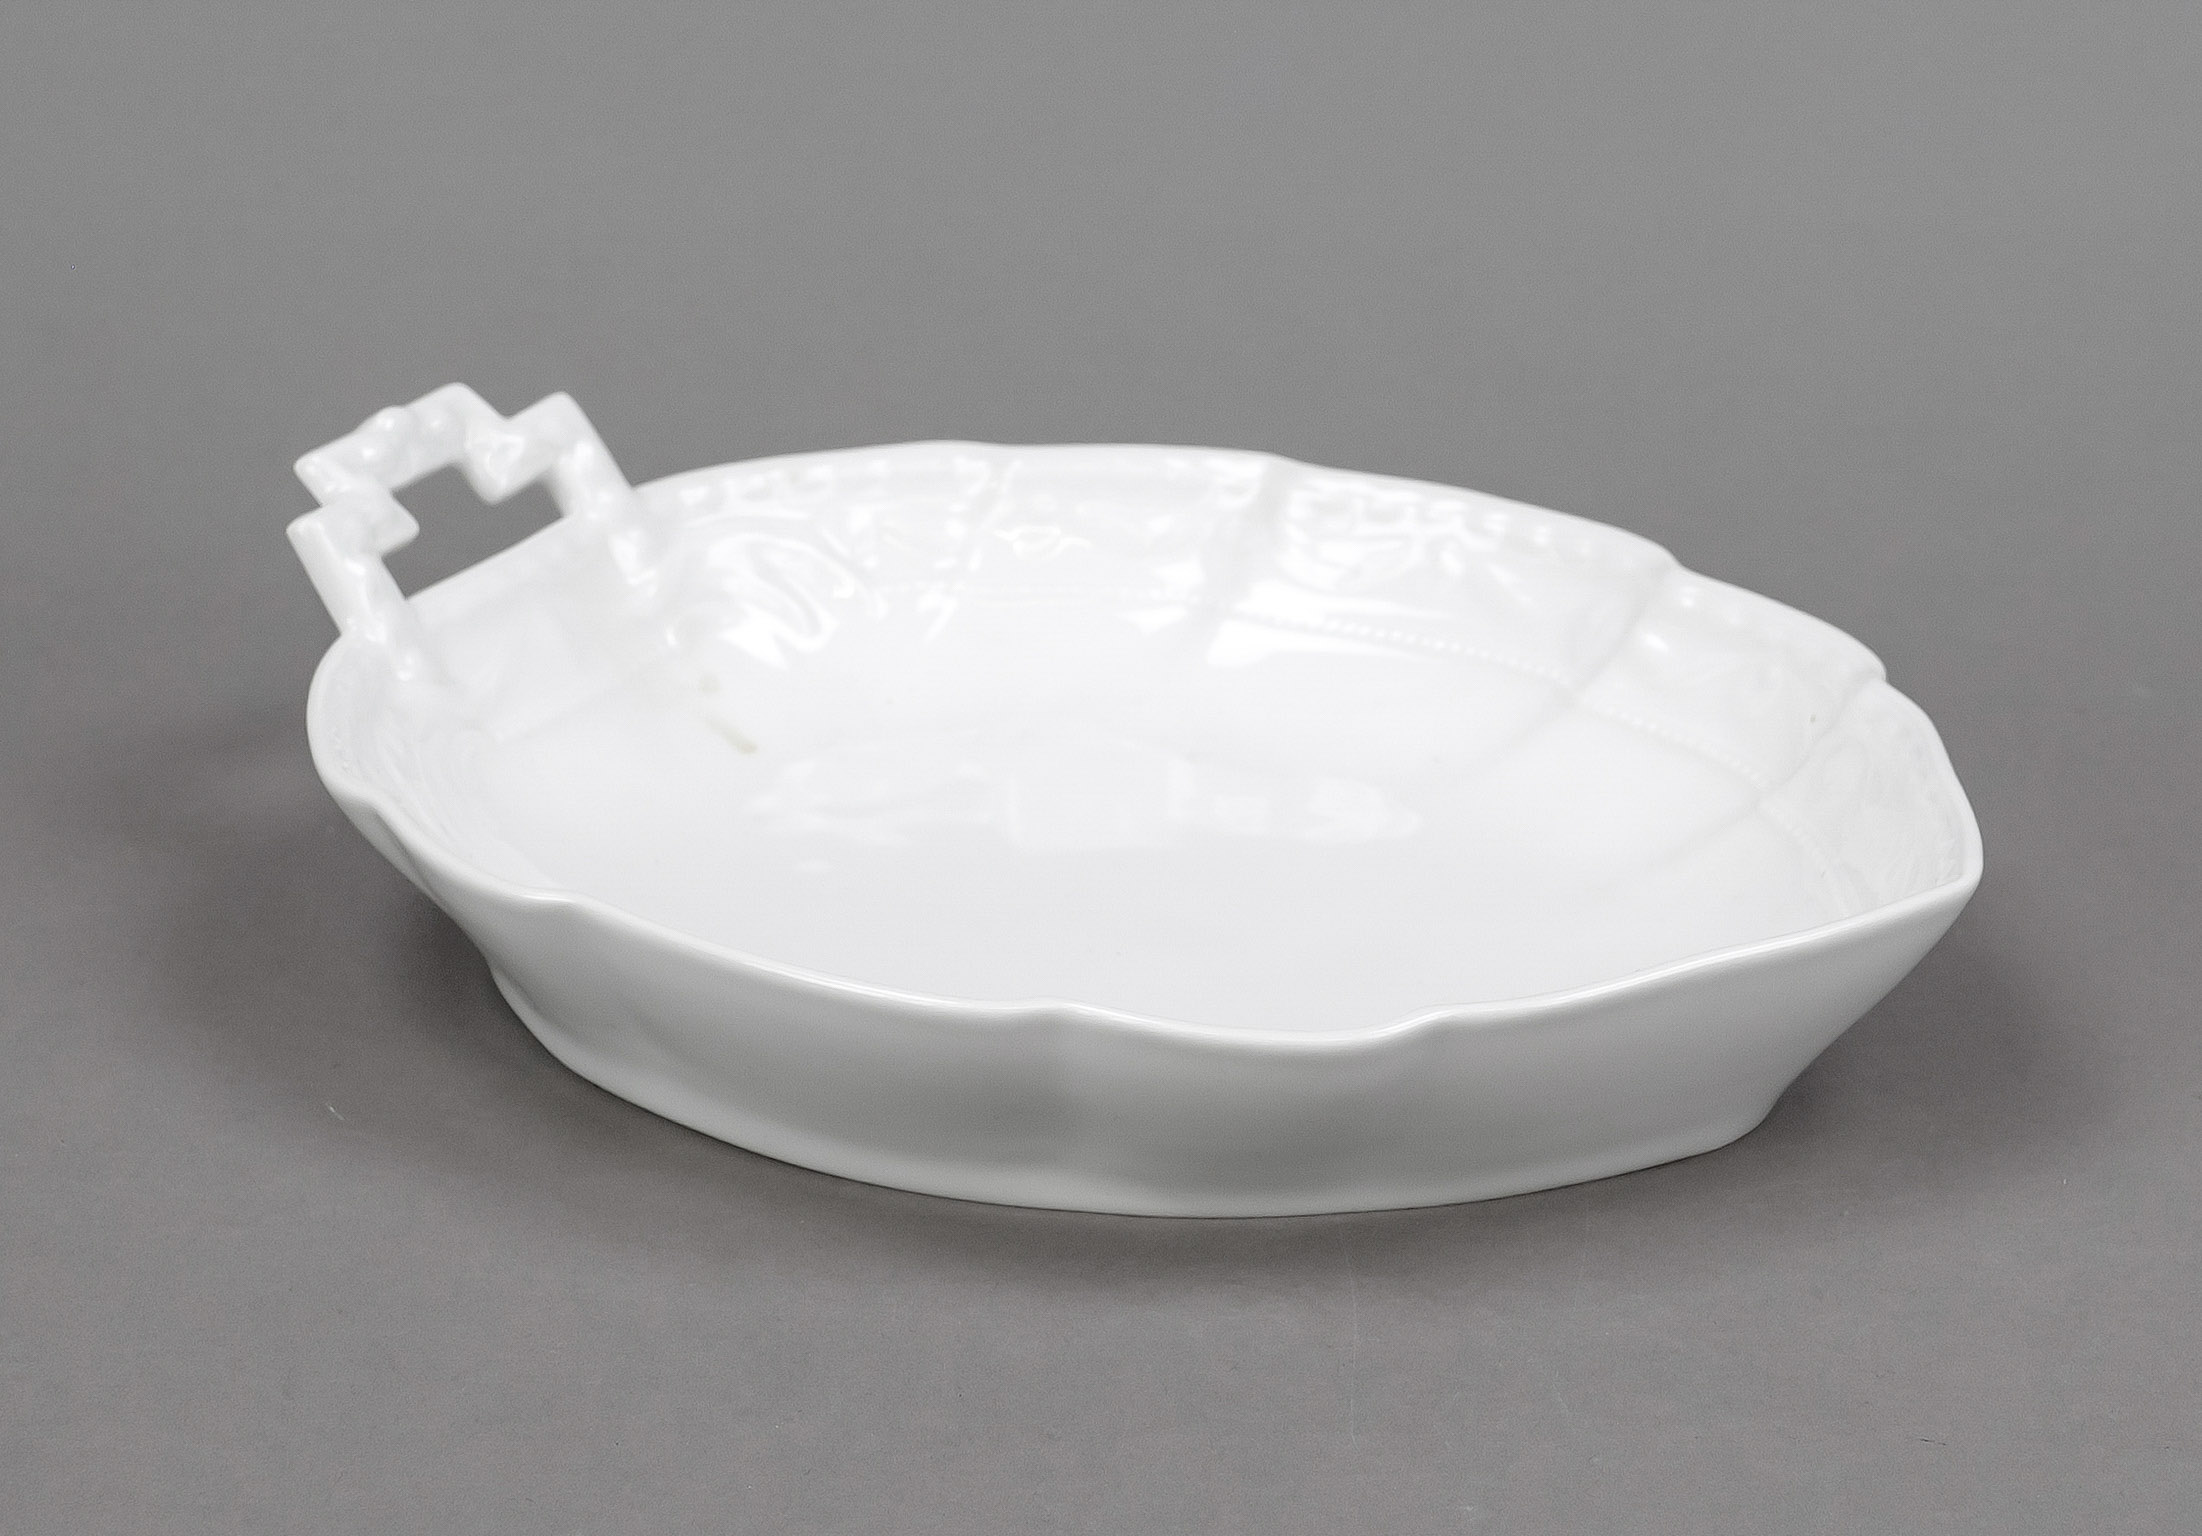 Leaf bowl, KPM Berlin, mark 1962-1992, 1st choice, Kurland shape, designed for the last Duke of - Image 2 of 2